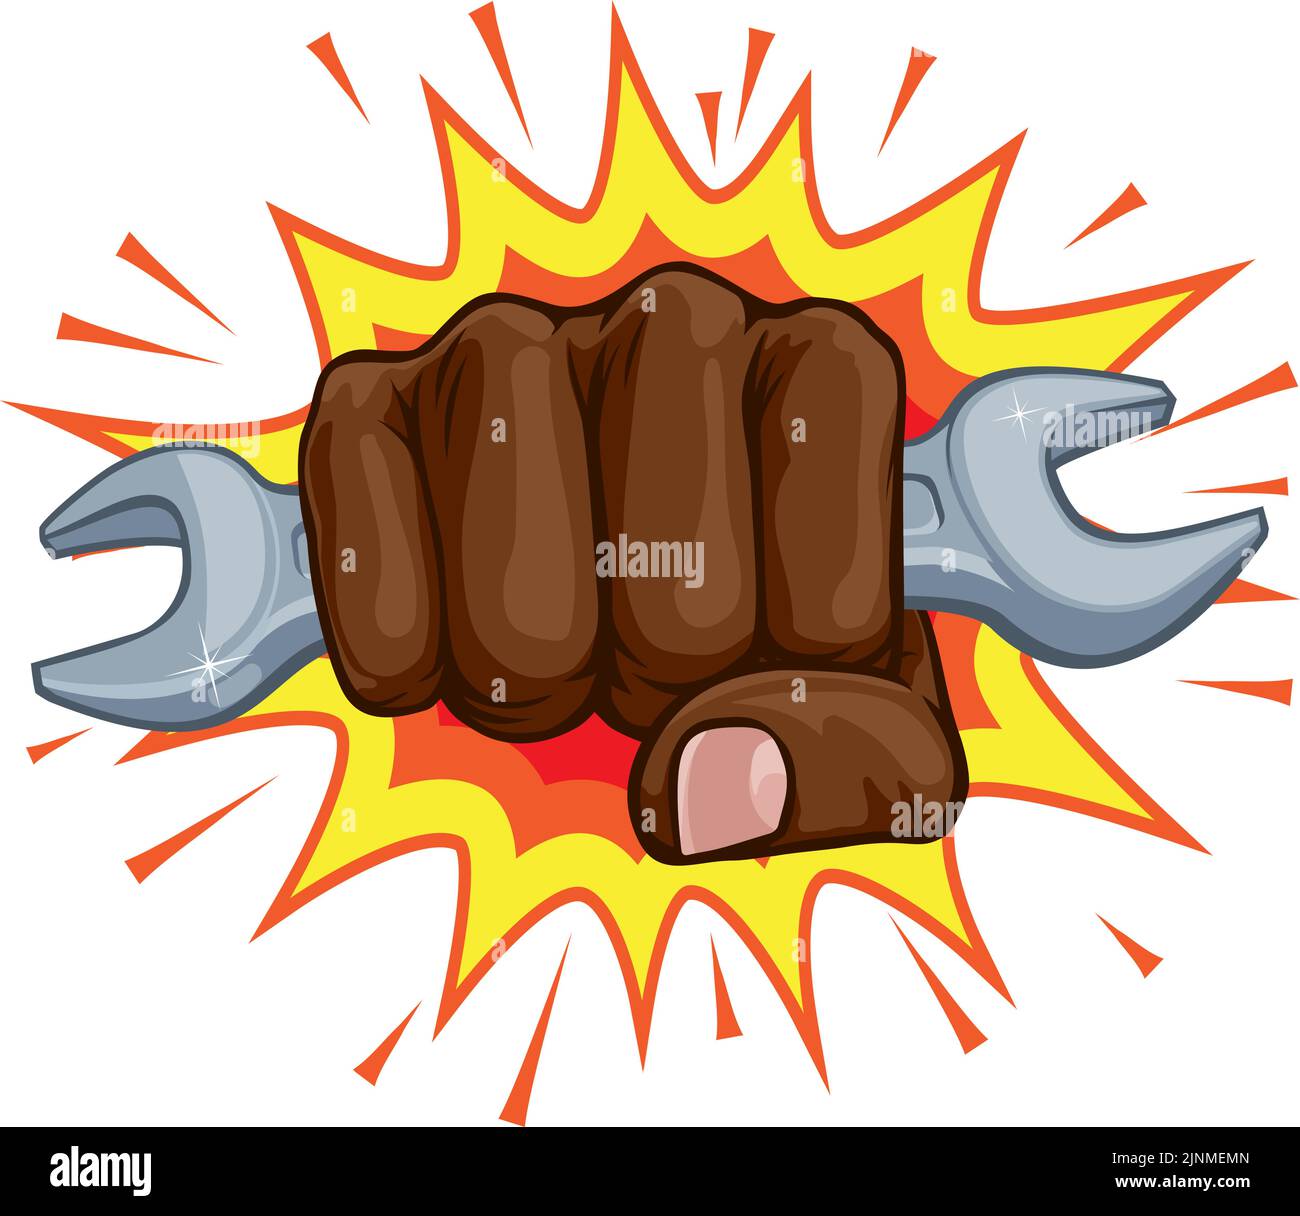 Spanner Wrench Fist Hand Explosion Pop Art Cartoon Stock Vector